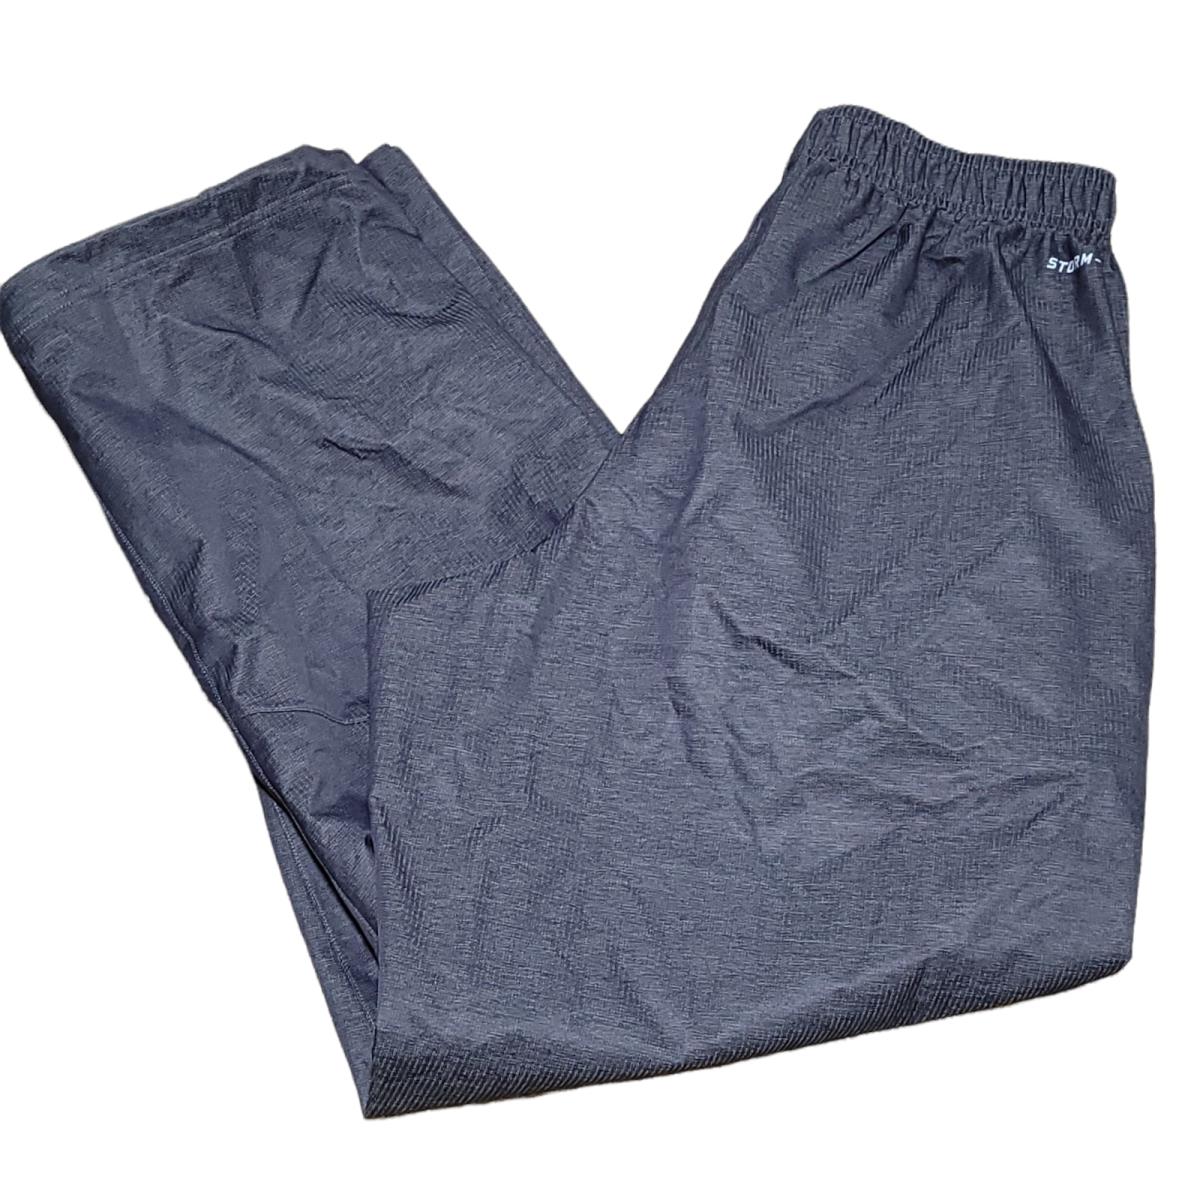 Nike Storm-fit Training Pants Gray Waterproof Pockets Adjustable Hem Men XL